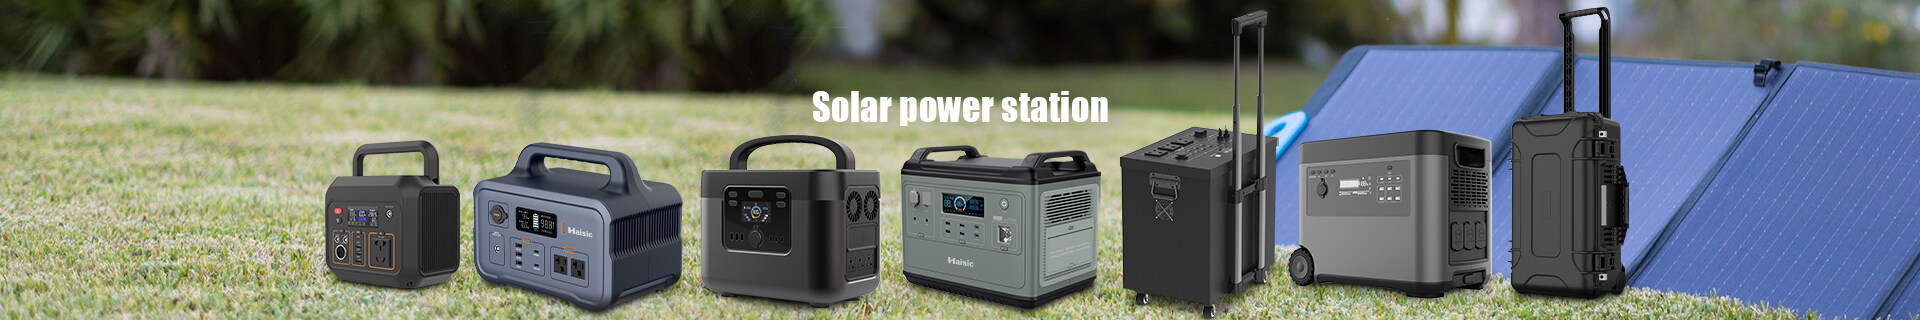 portable solar generator wholesale, portable solar generators wholesale, portable solar power generator manufacturers